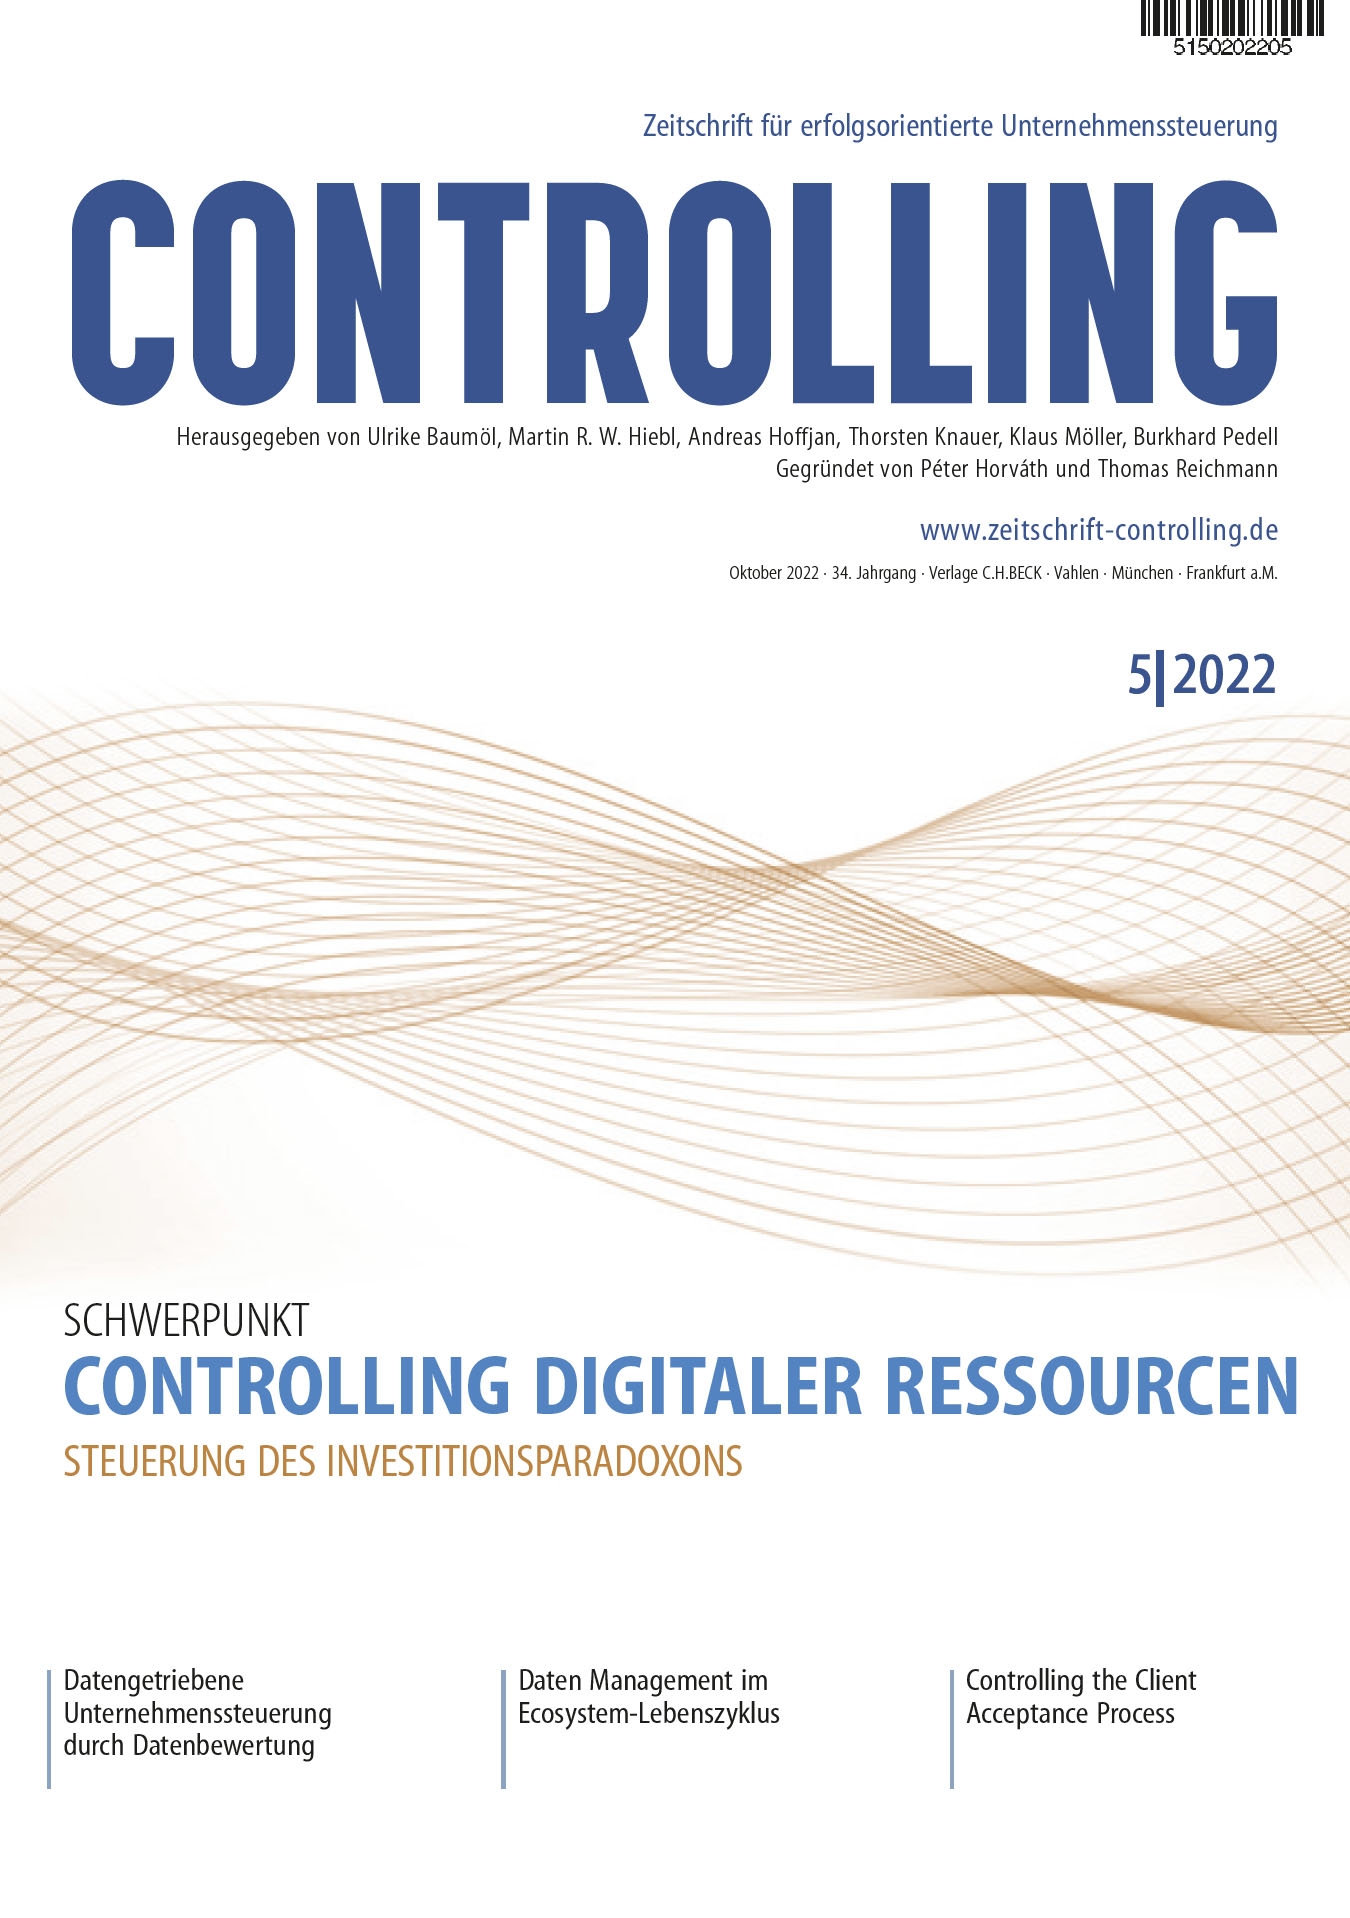 Control5ing 5_2022_Controlling digitaler Ressourcen